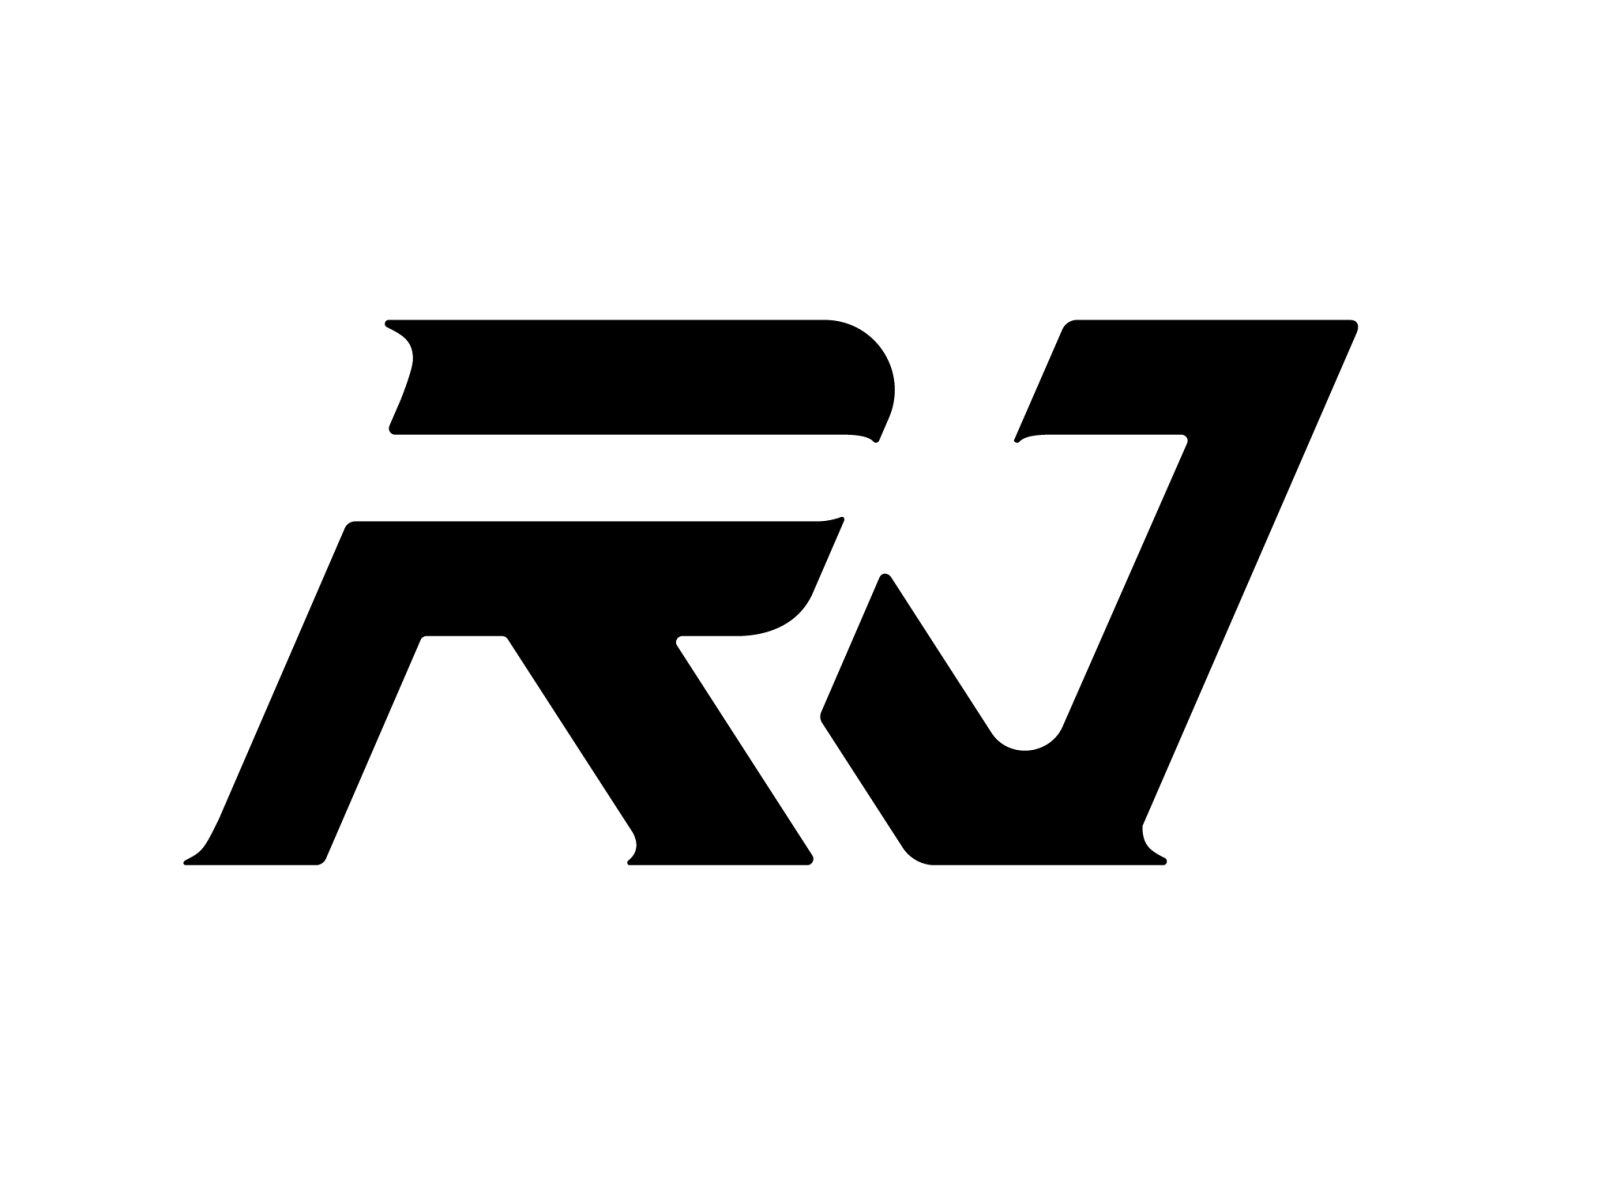 Cool and modern rj logo design Royalty Free Vector Image